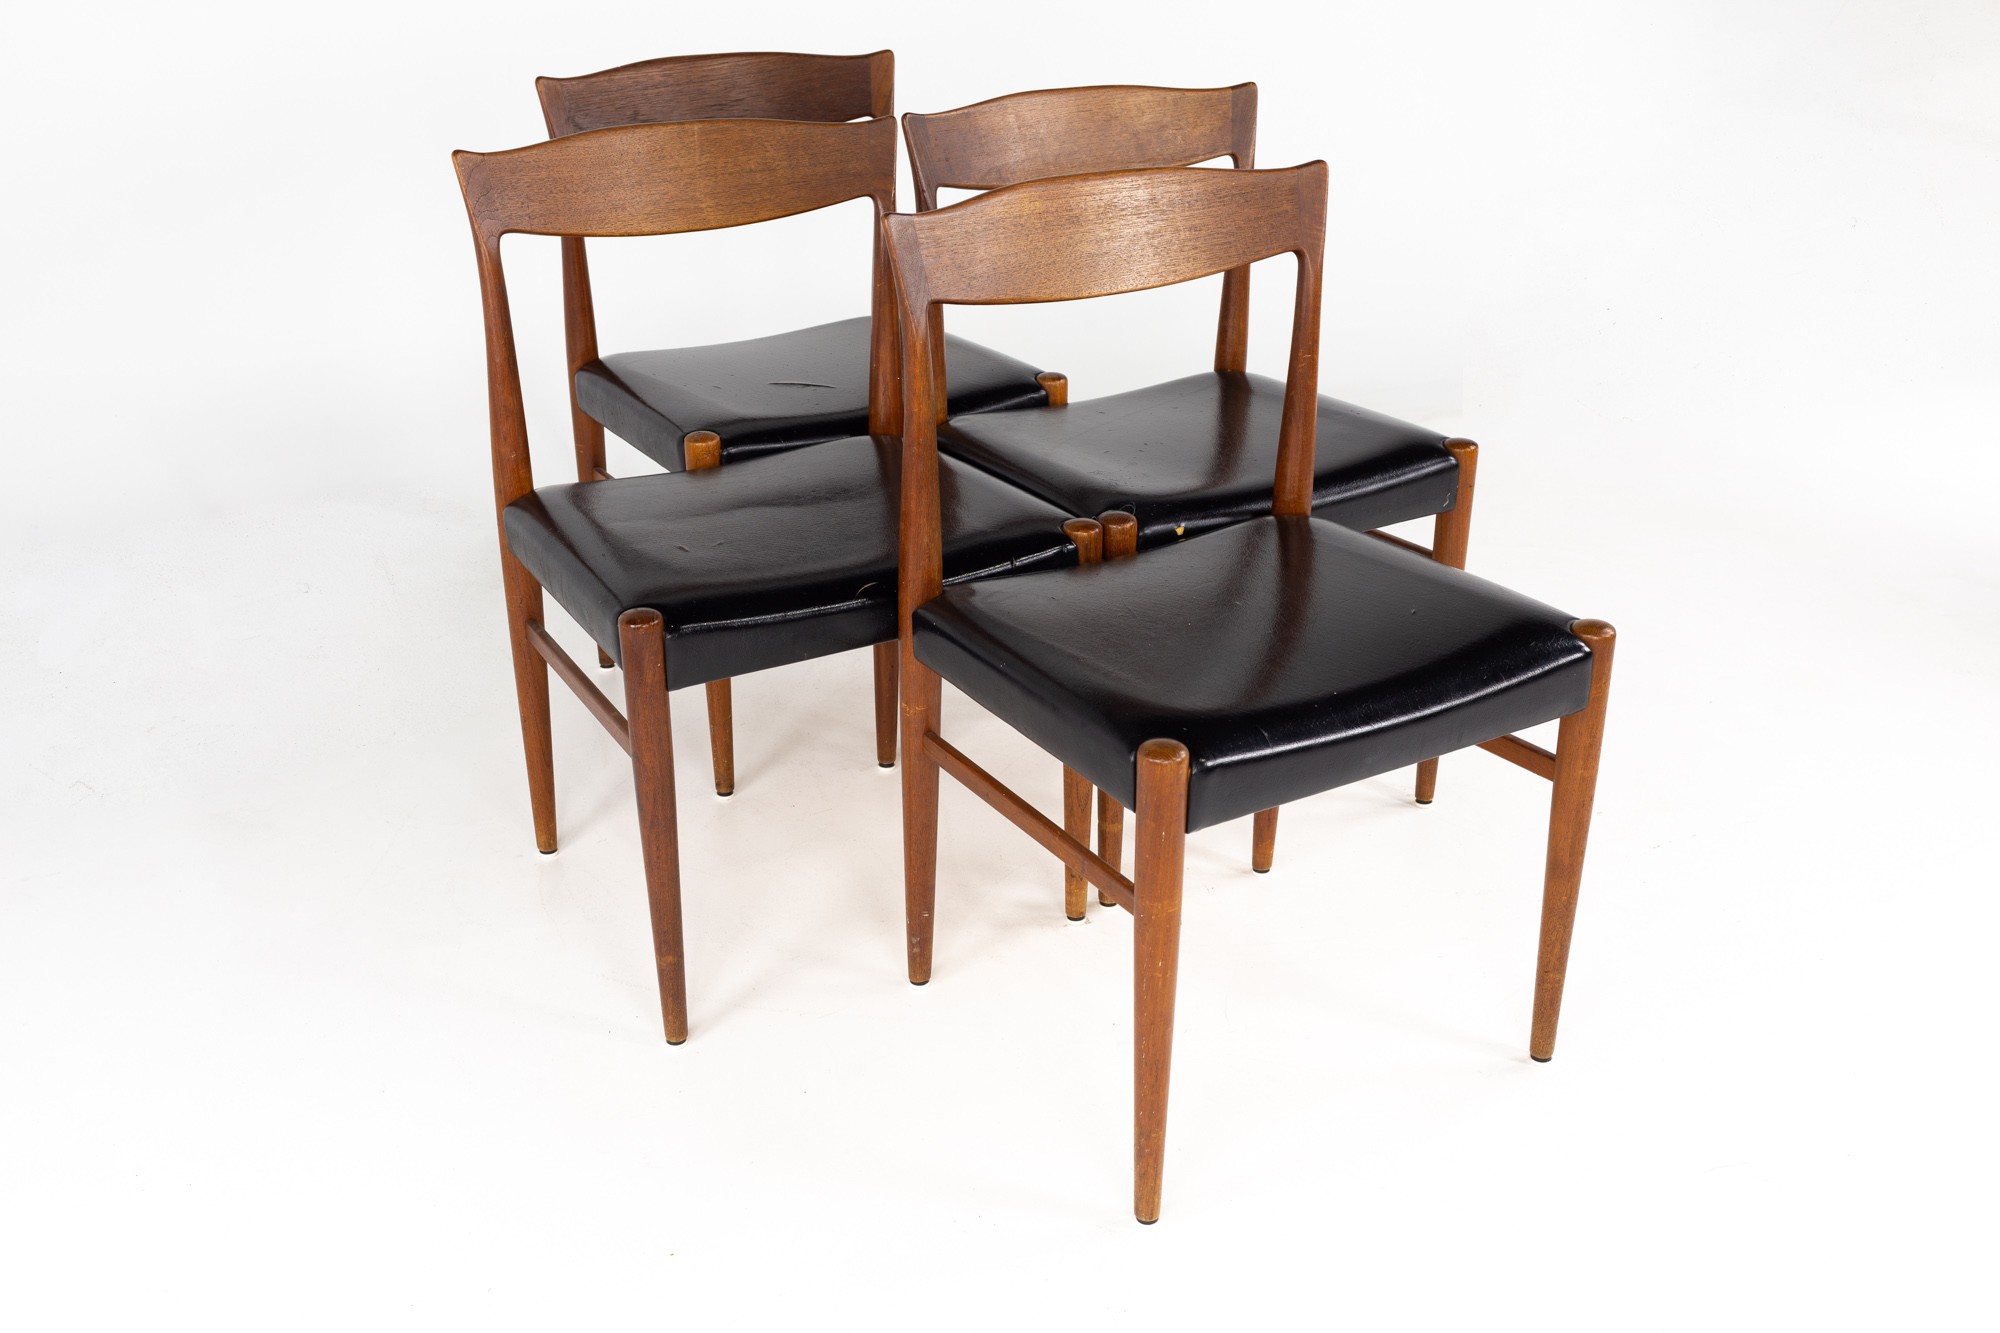 Arne Hovmand Olsen Mid Century Teak Dining Chairs - Set of 4